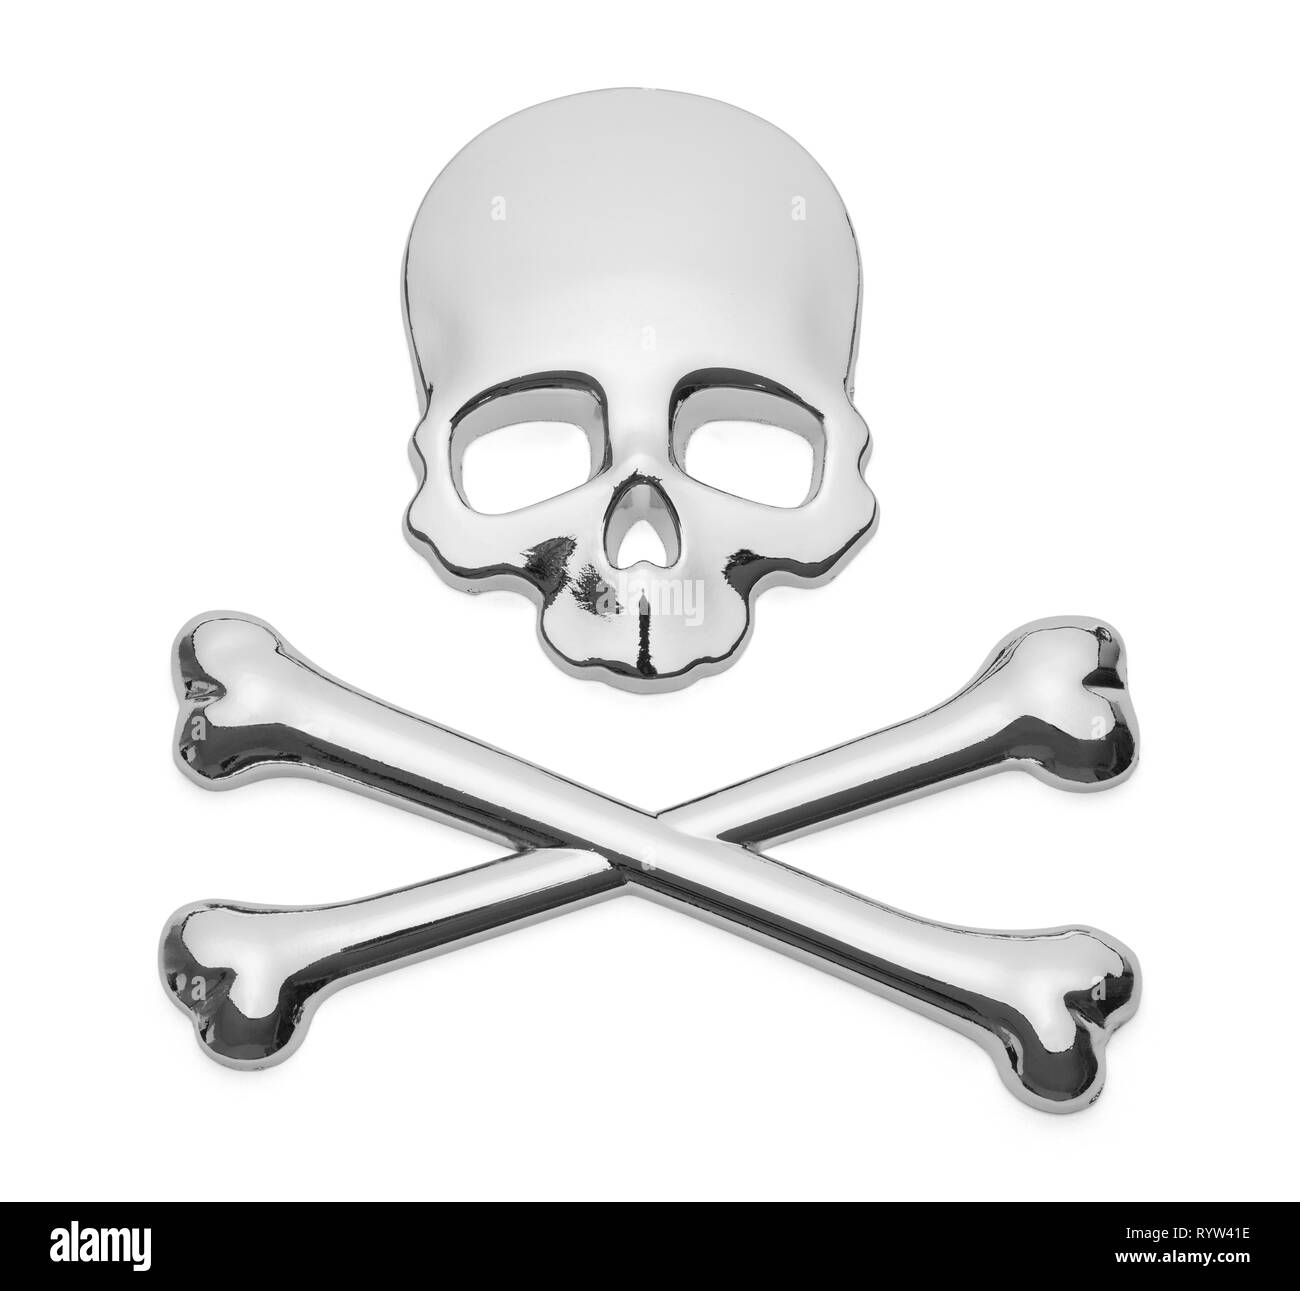 Metal skull -Fotos und -Bildmaterial in hoher Auflösung – Alamy